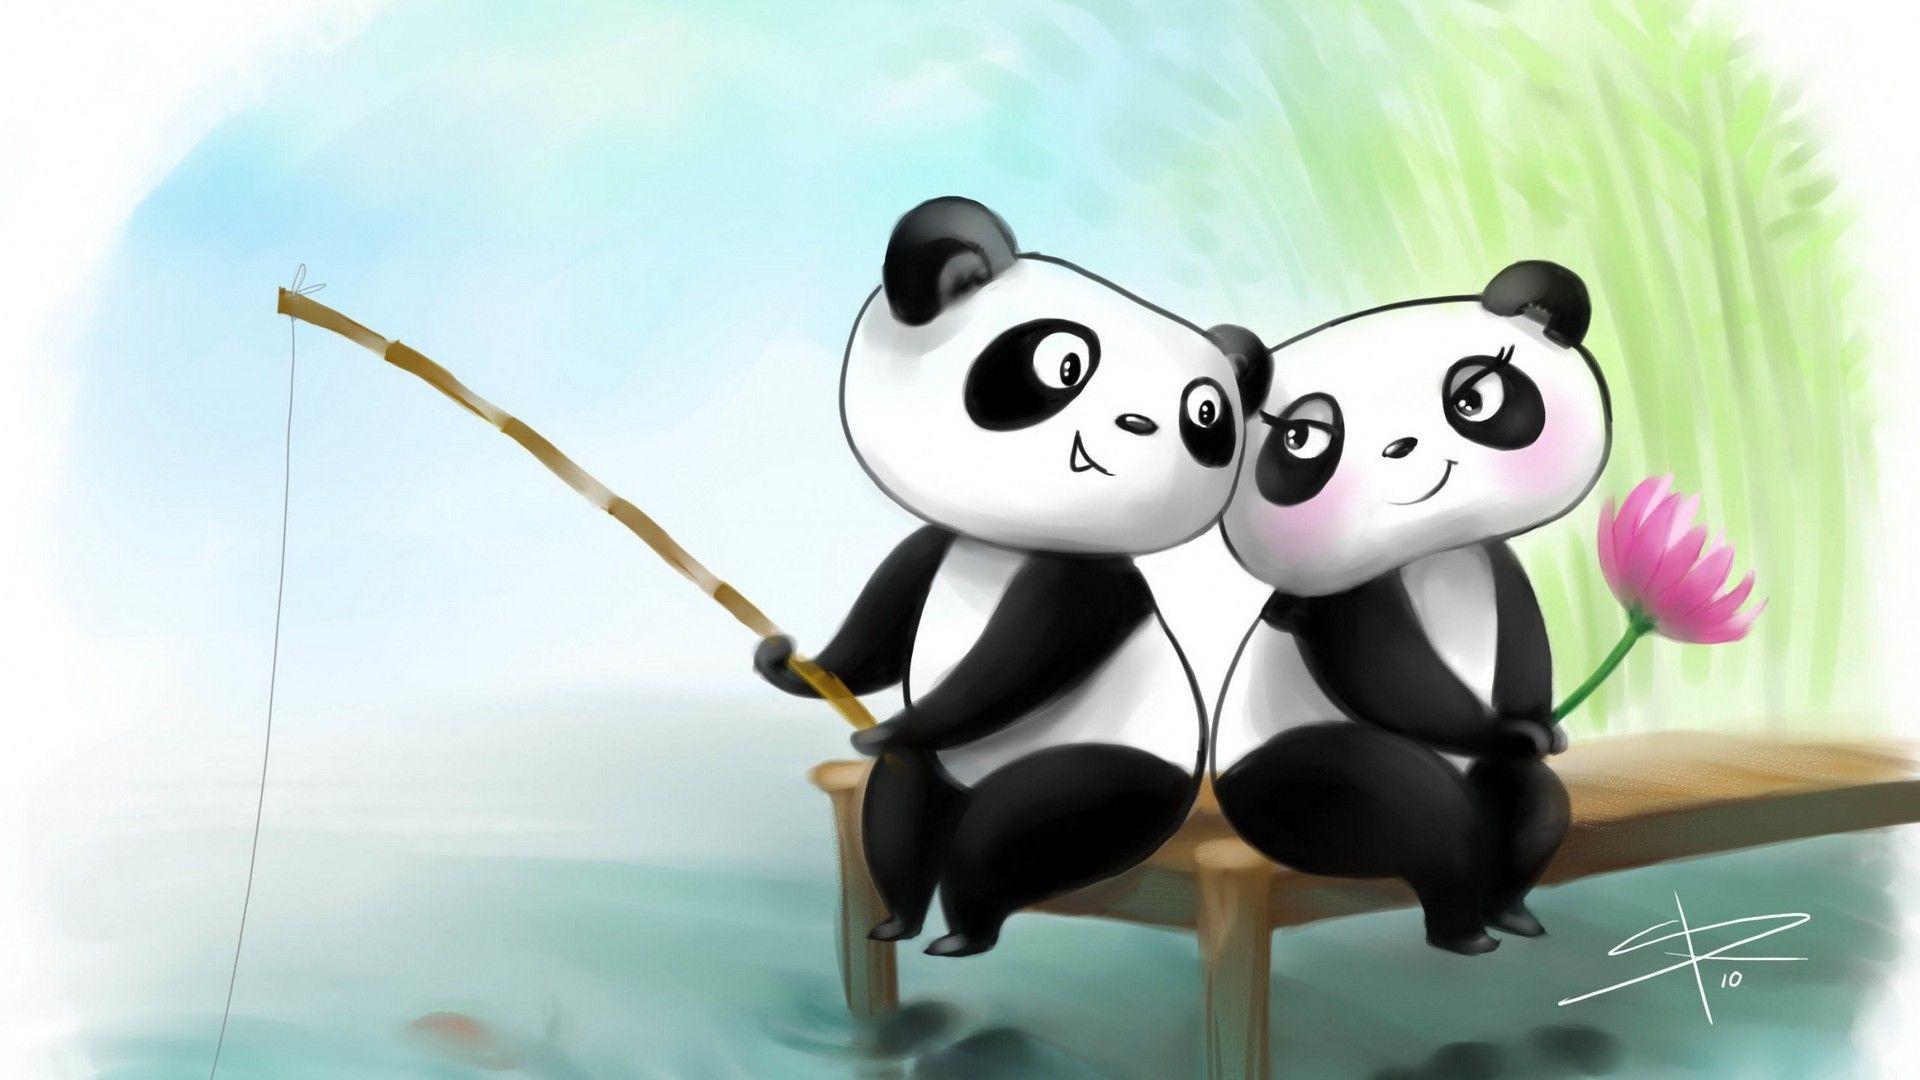 Cute Couple Panda Wallpaper. Best HD Wallpaper. Cute panda wallpaper, Panda wallpaper, Cute couple wallpaper